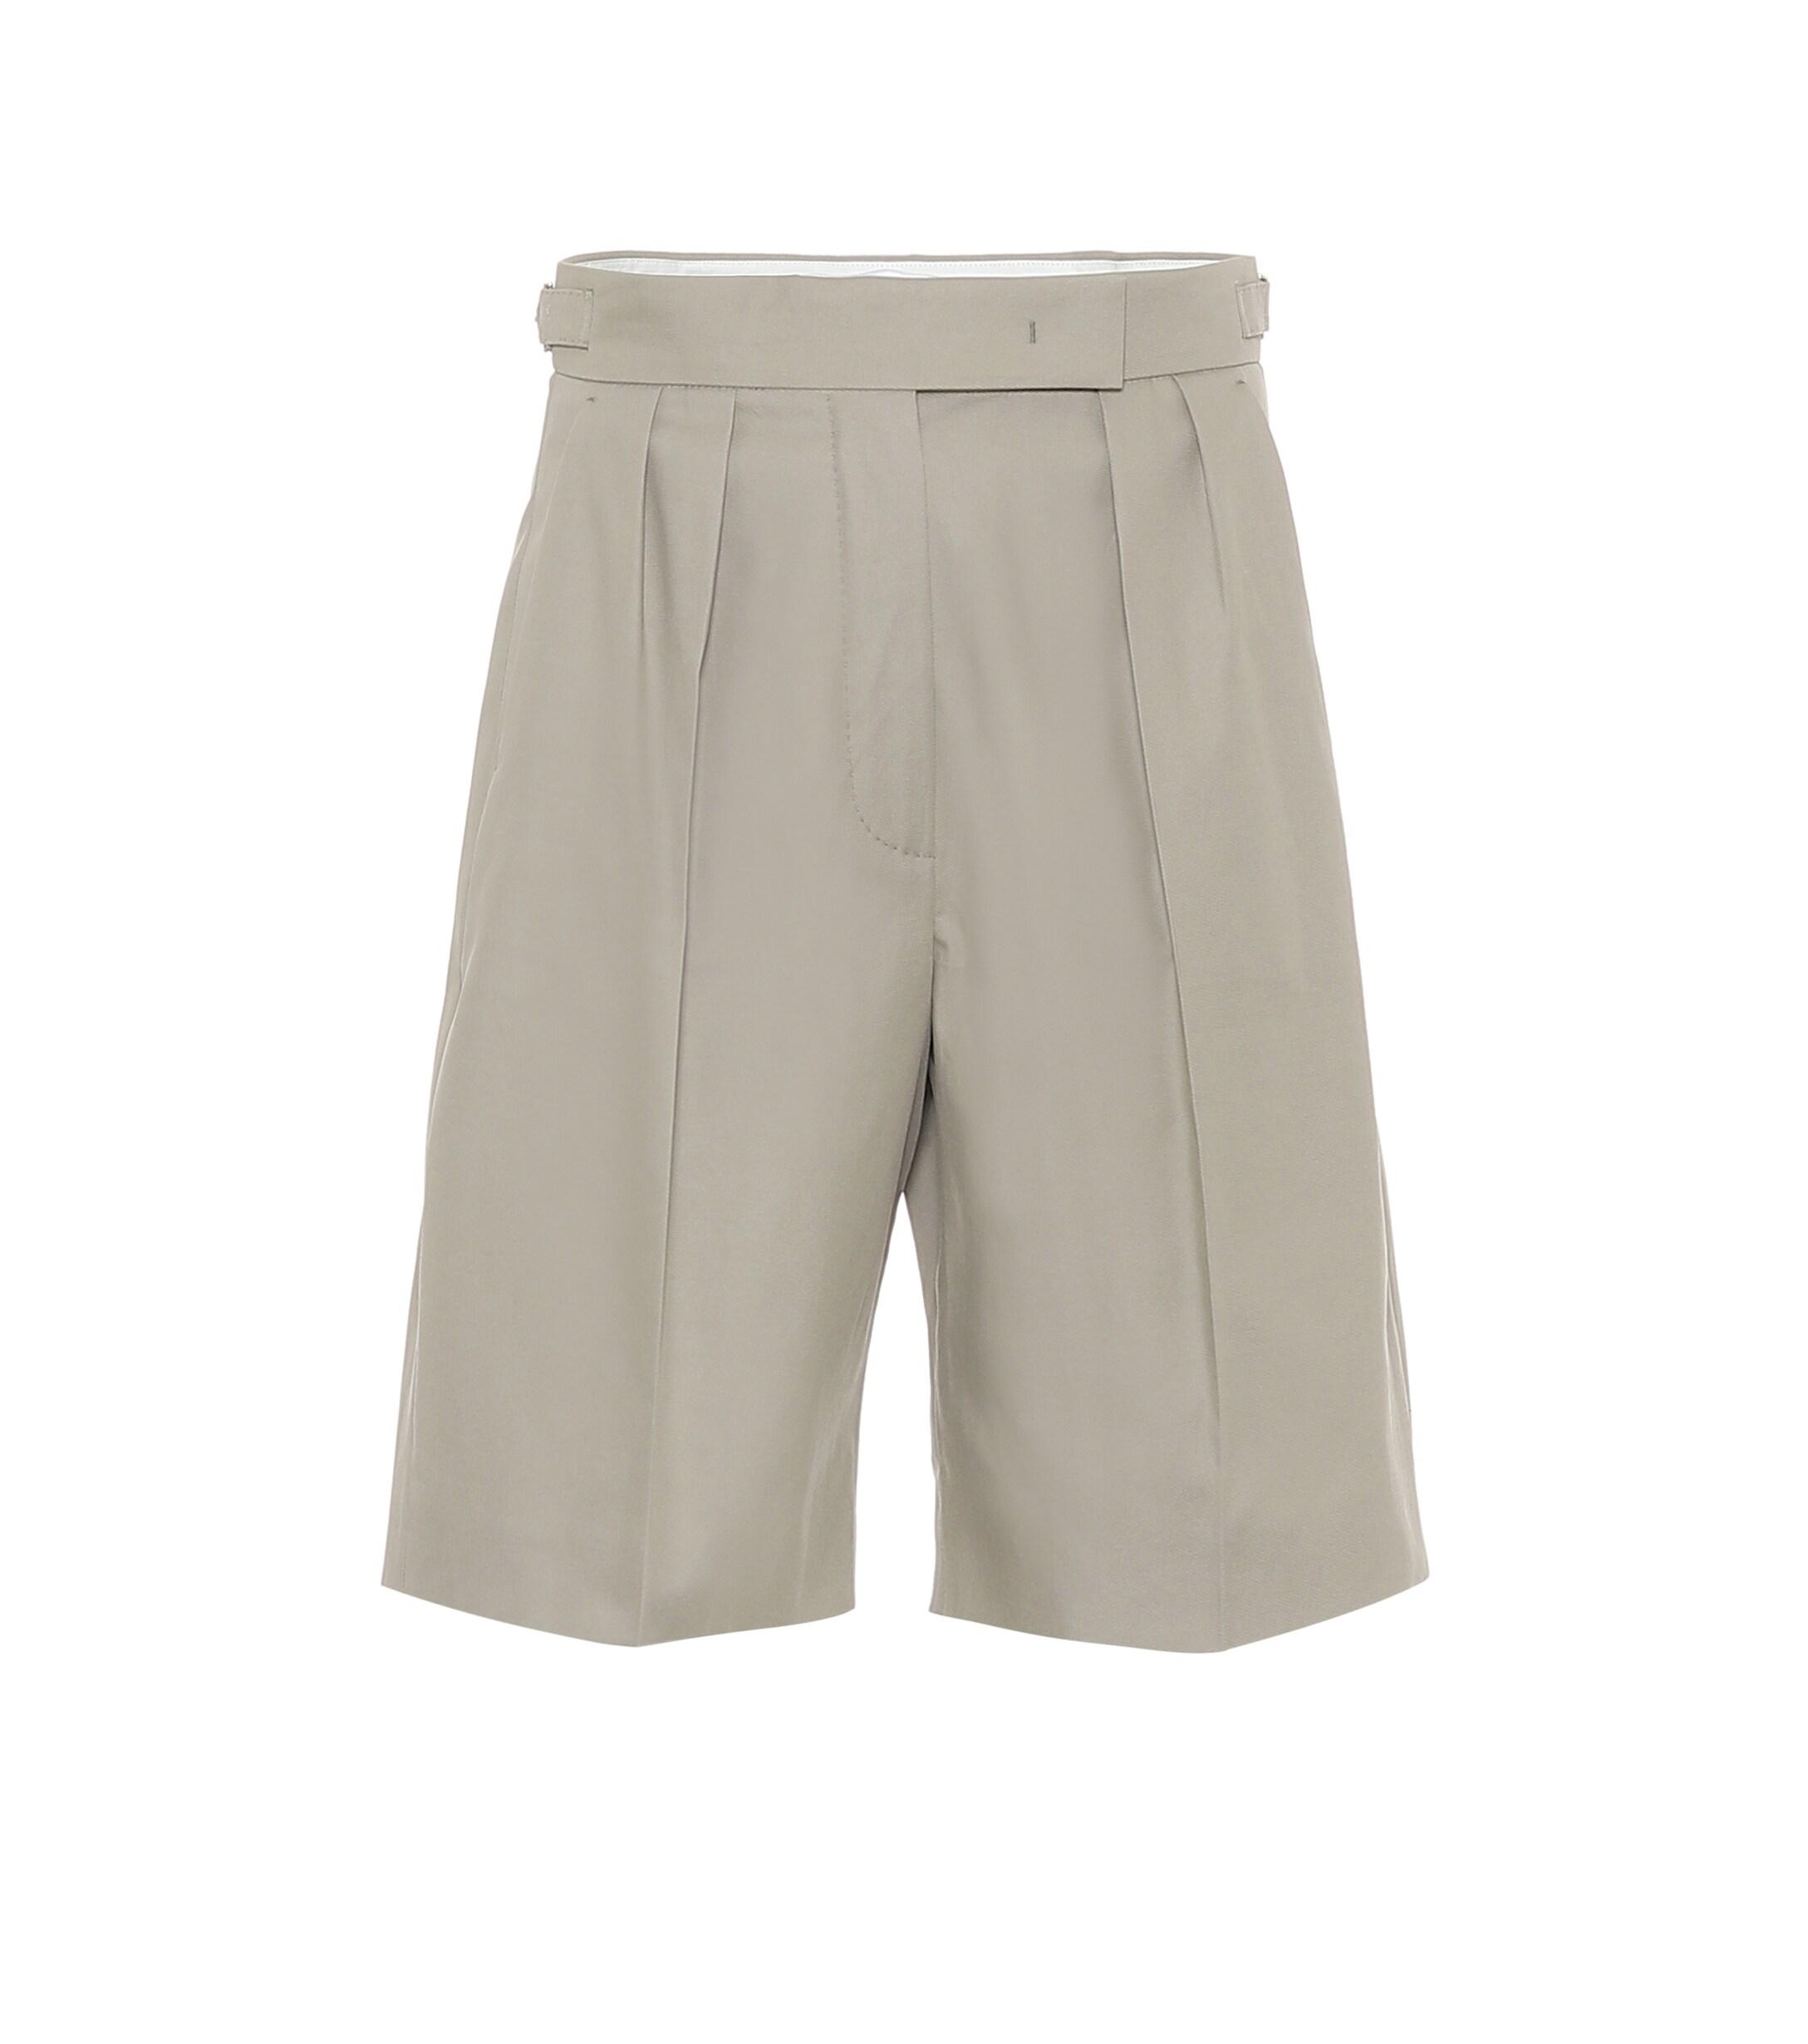 Max Mara Safari Cotton Bermuda Shorts in Beige (Natural) - Lyst